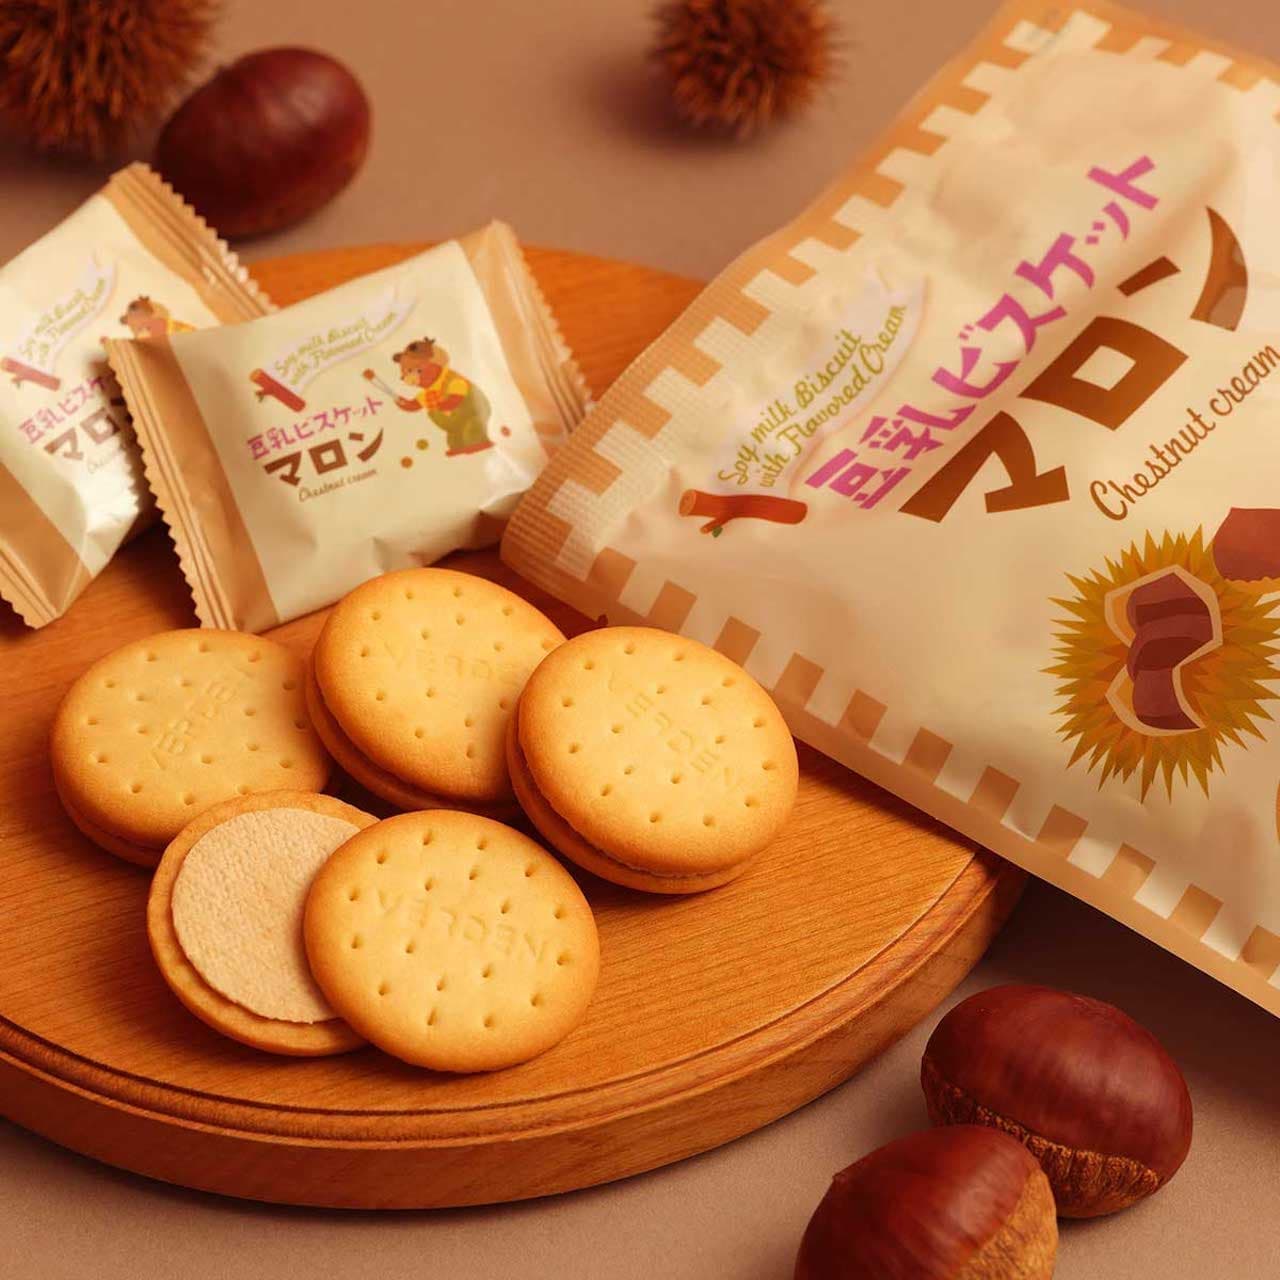 KALDI "Original Soy Milk Biscuit Marron Cream